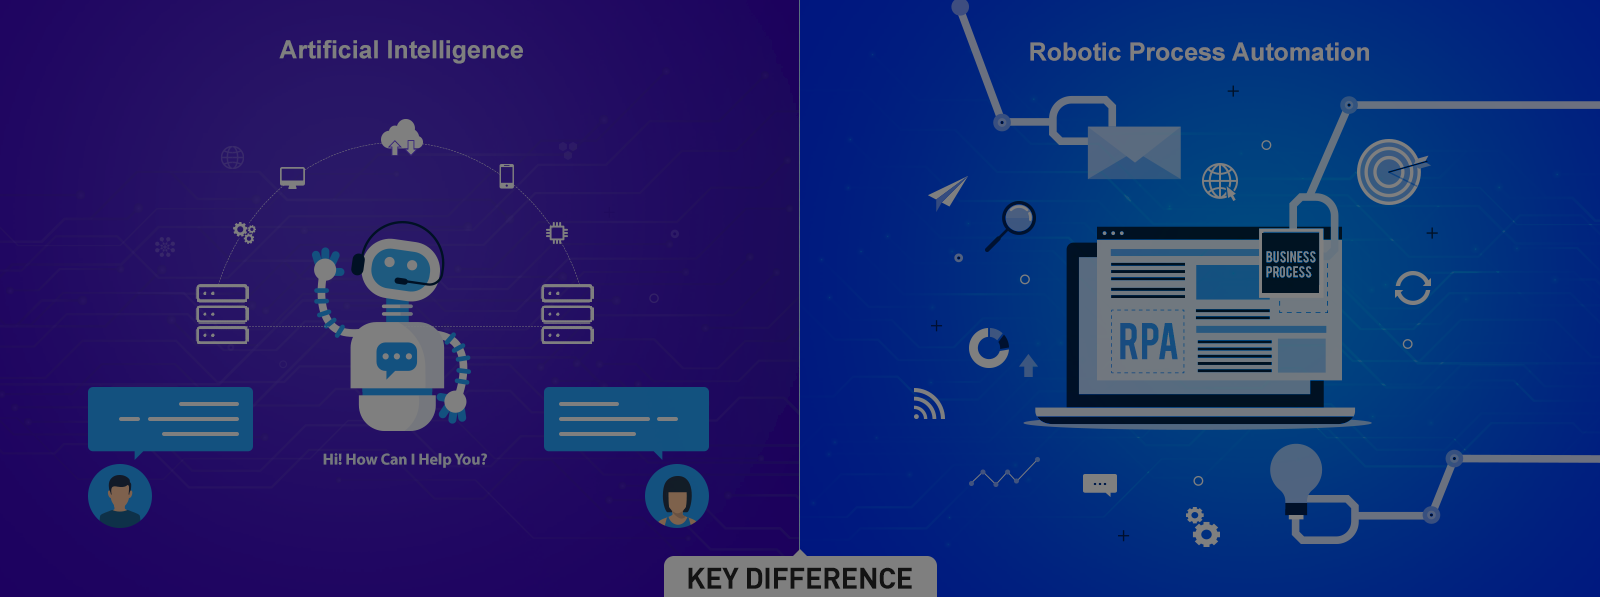 Robotic Process Automation (RPA) vs Artificial Intelligence (AI)